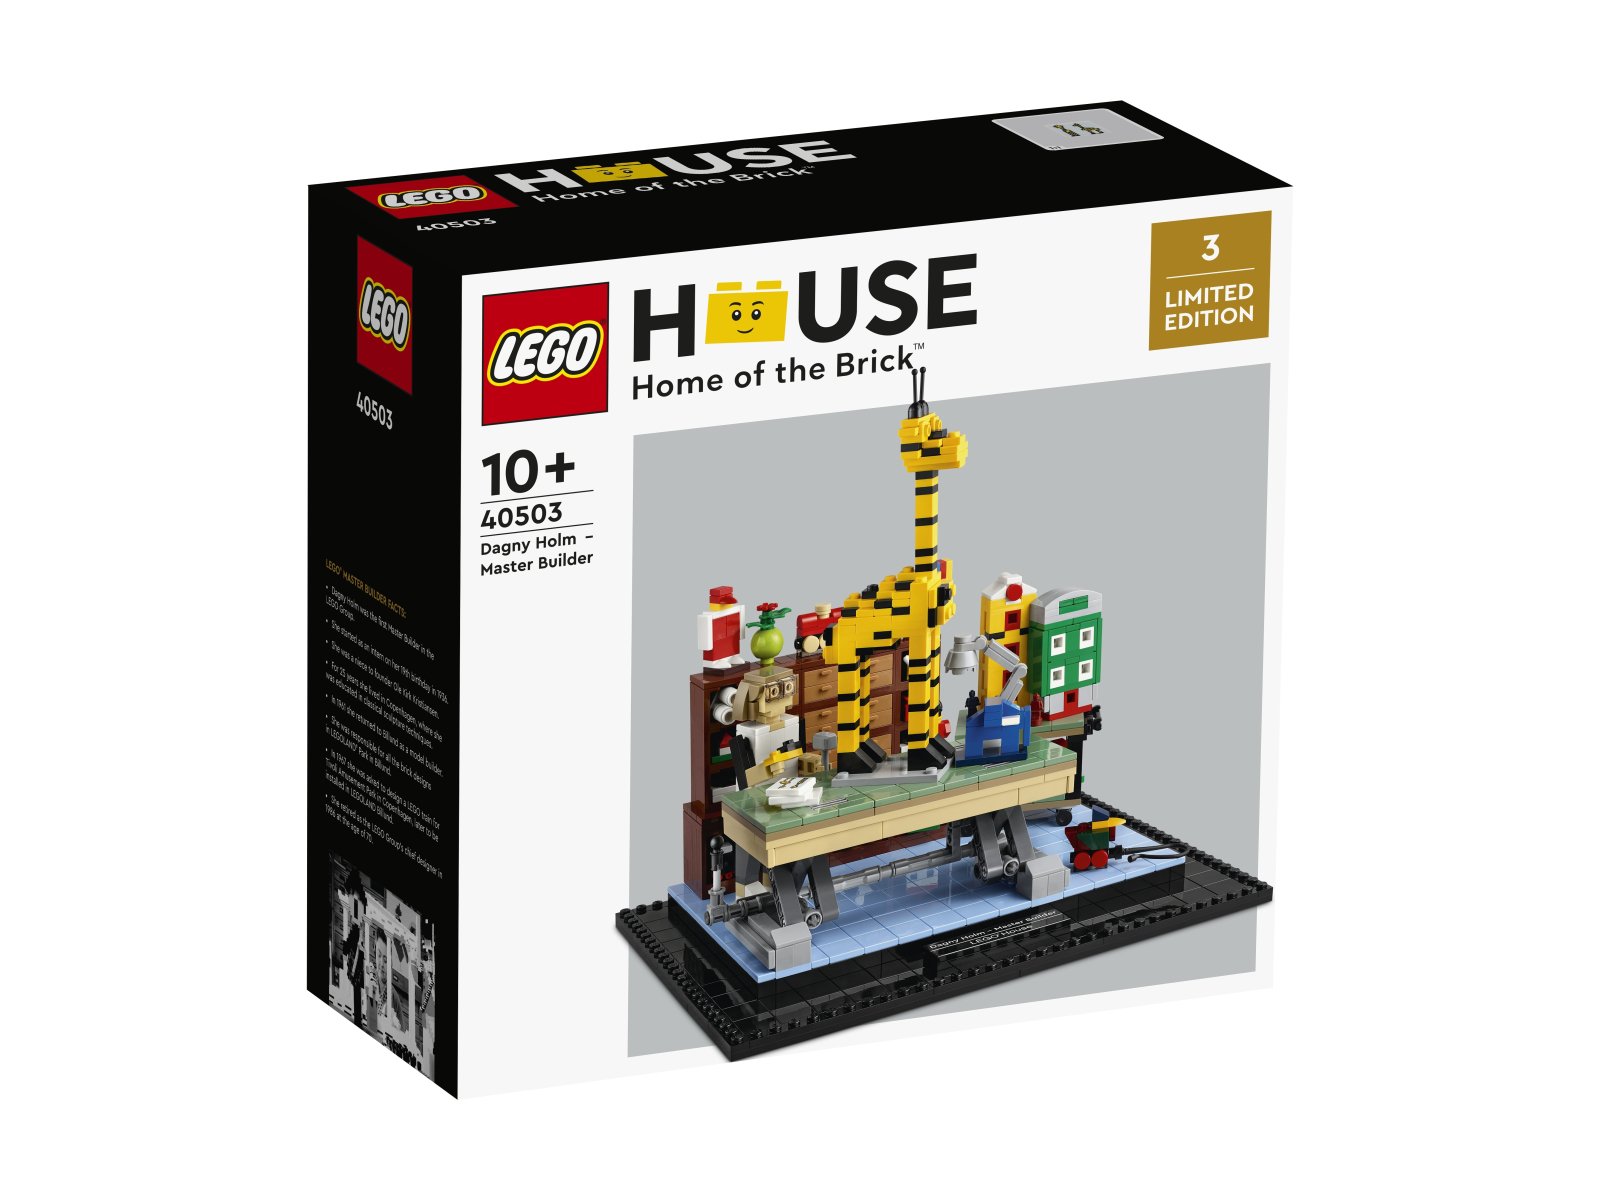 LEGO 40503 House Dagny Holm – Master Builder